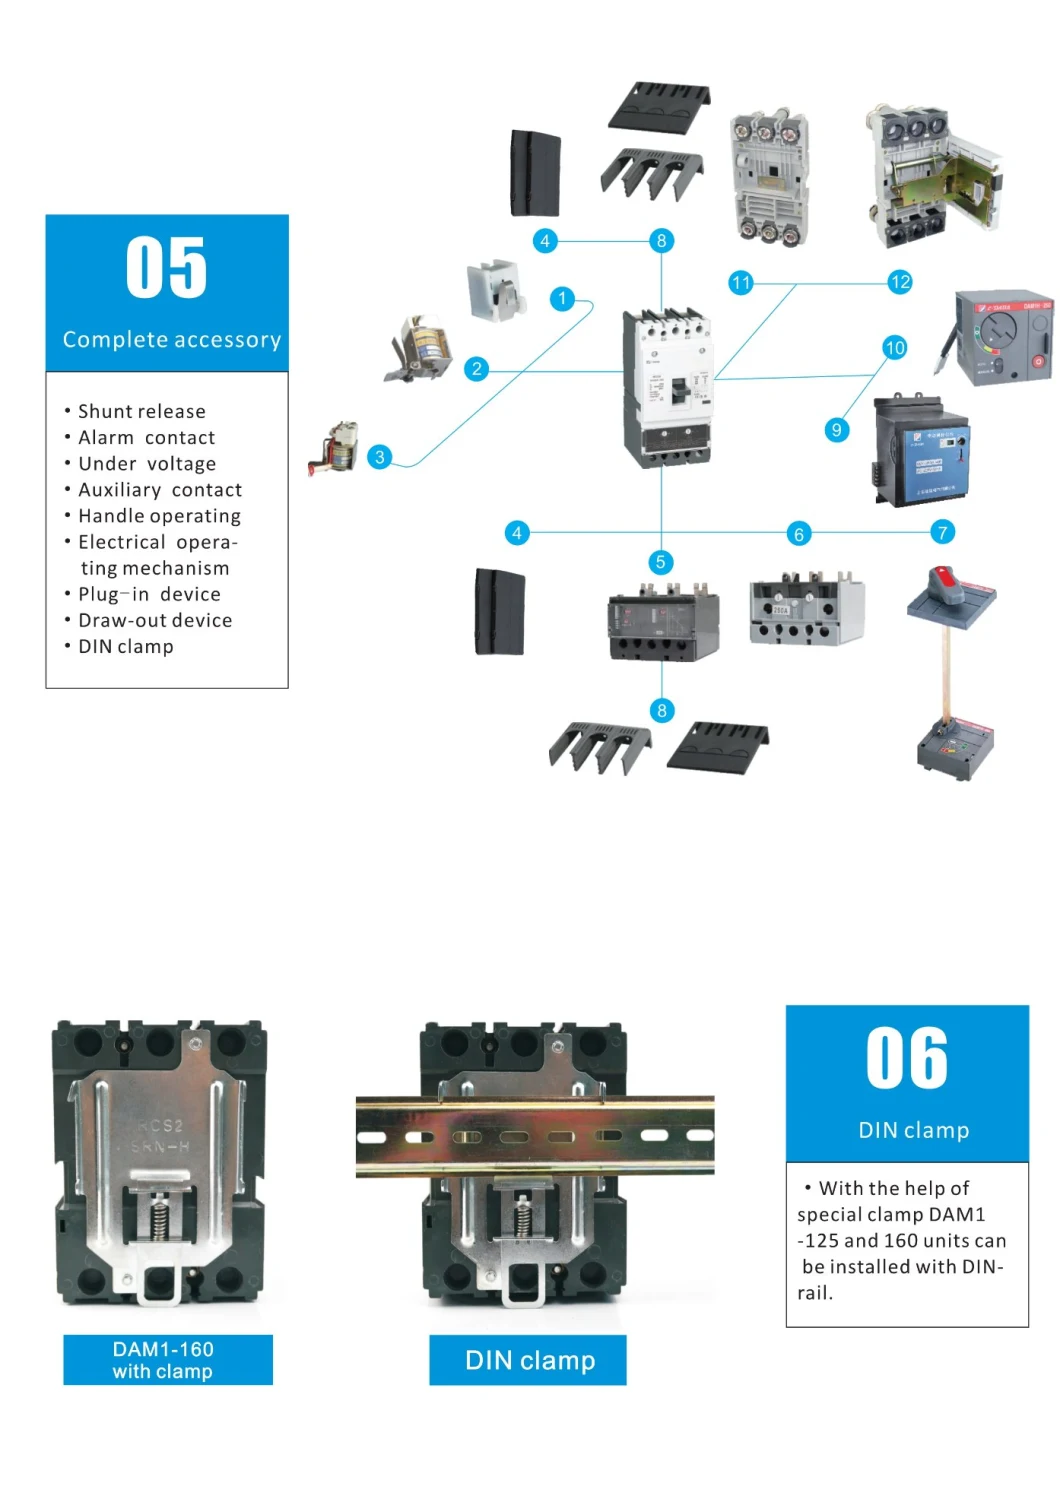 Dam1-800 3p Thermal Adjustable Molded Case Circuit Breaker MCCB